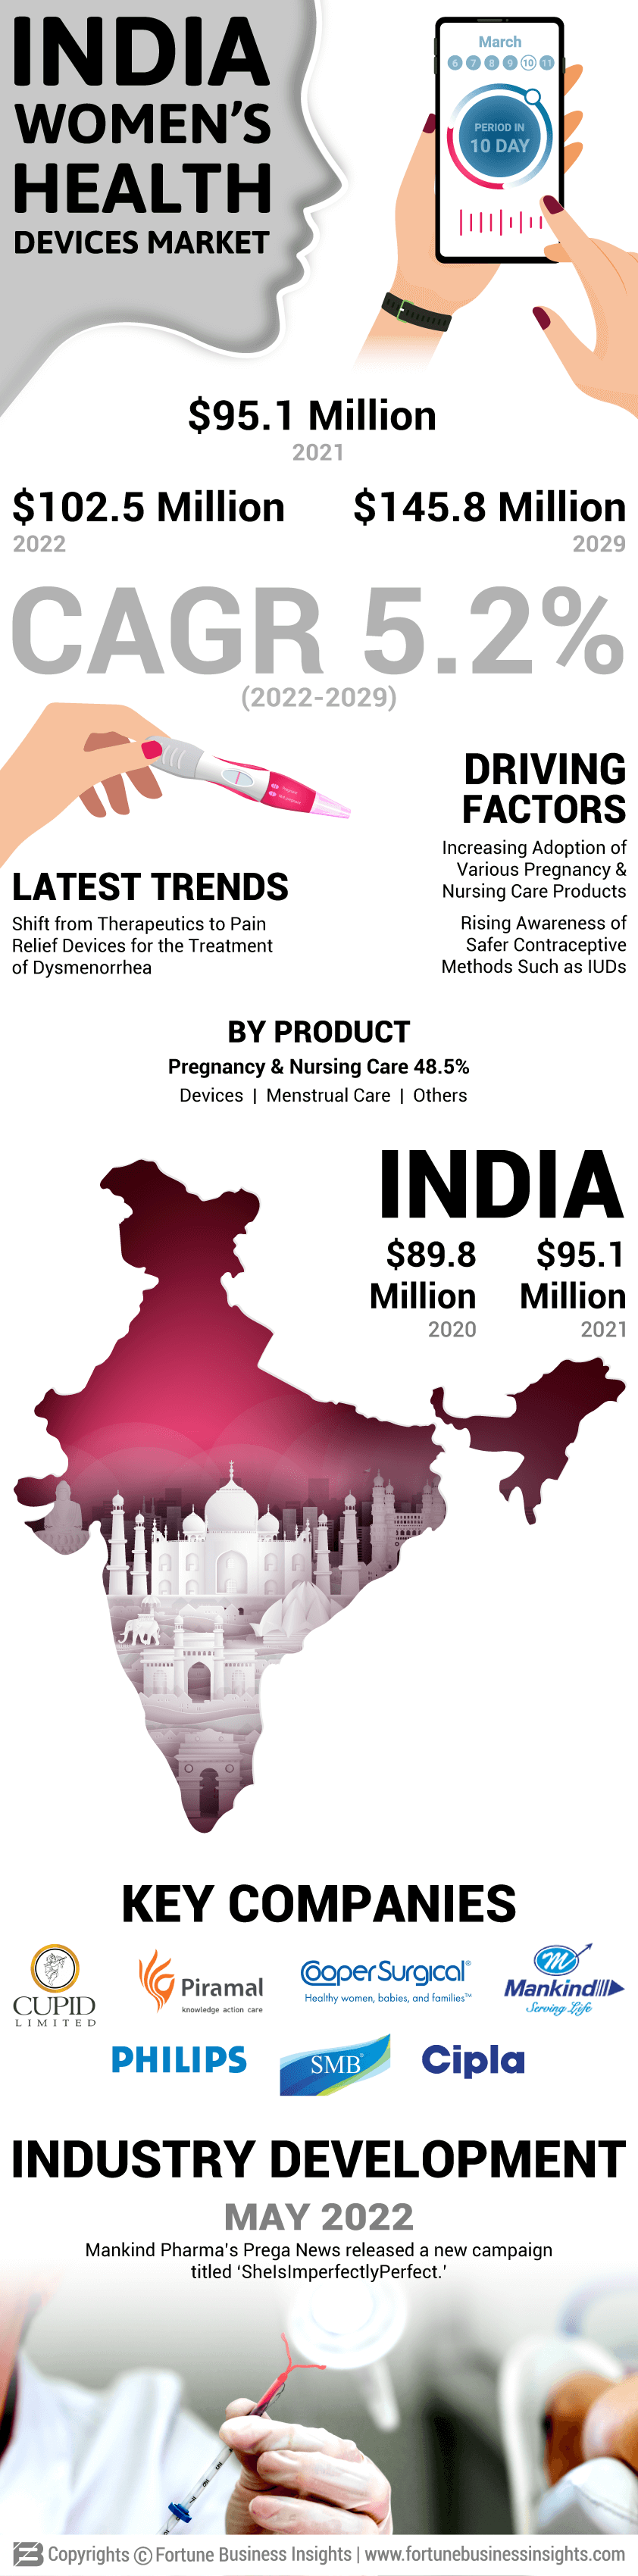 India Women’s Health Devices Market